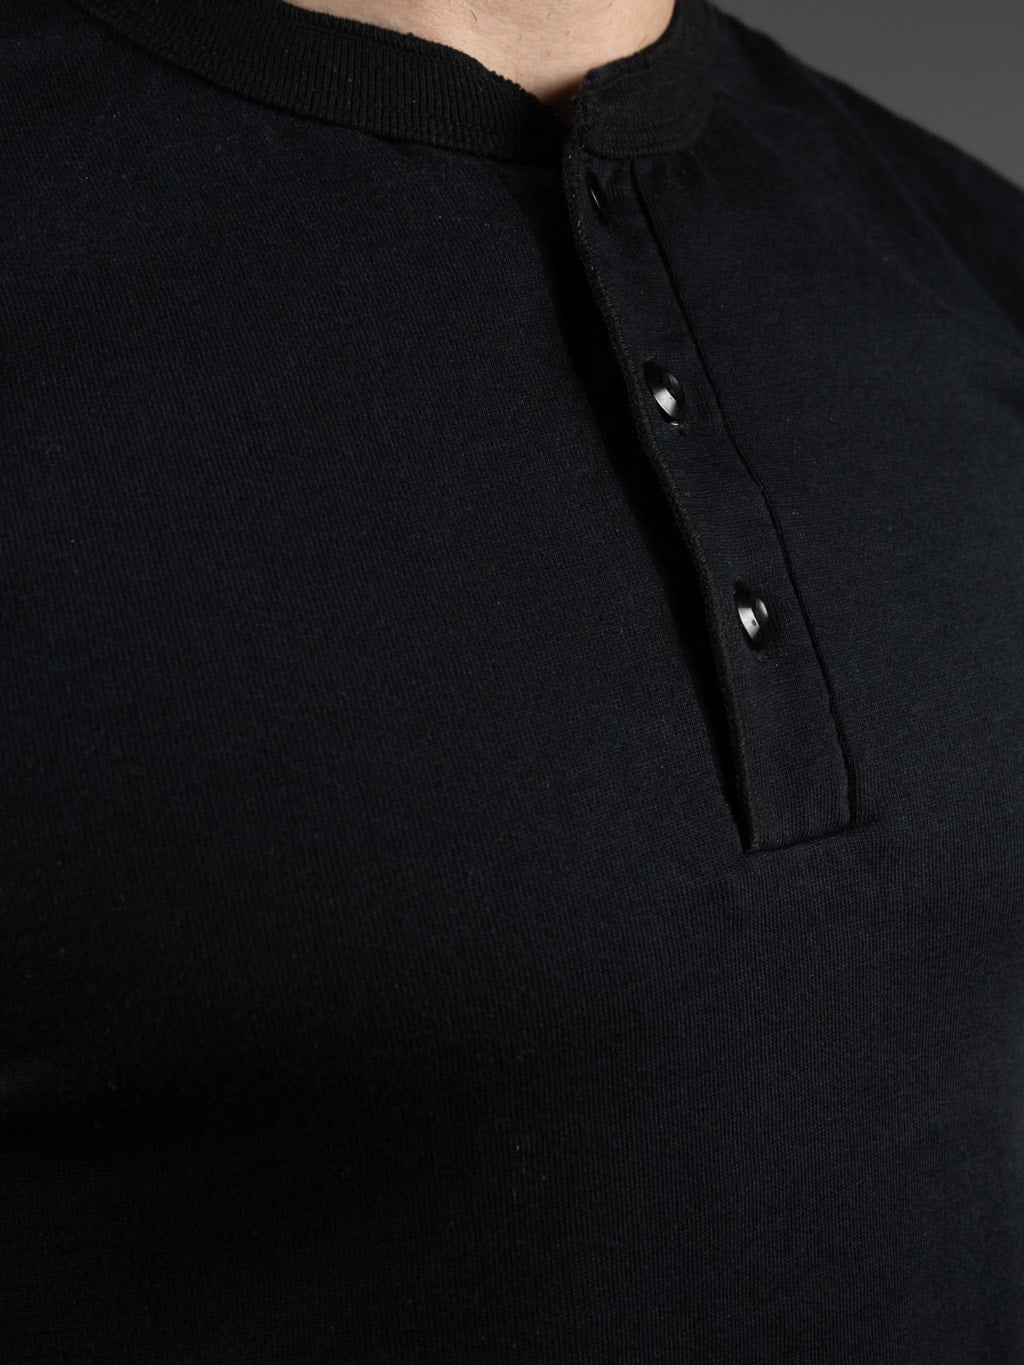 UES Ramayana Henley Neck T-Shirt Black chest